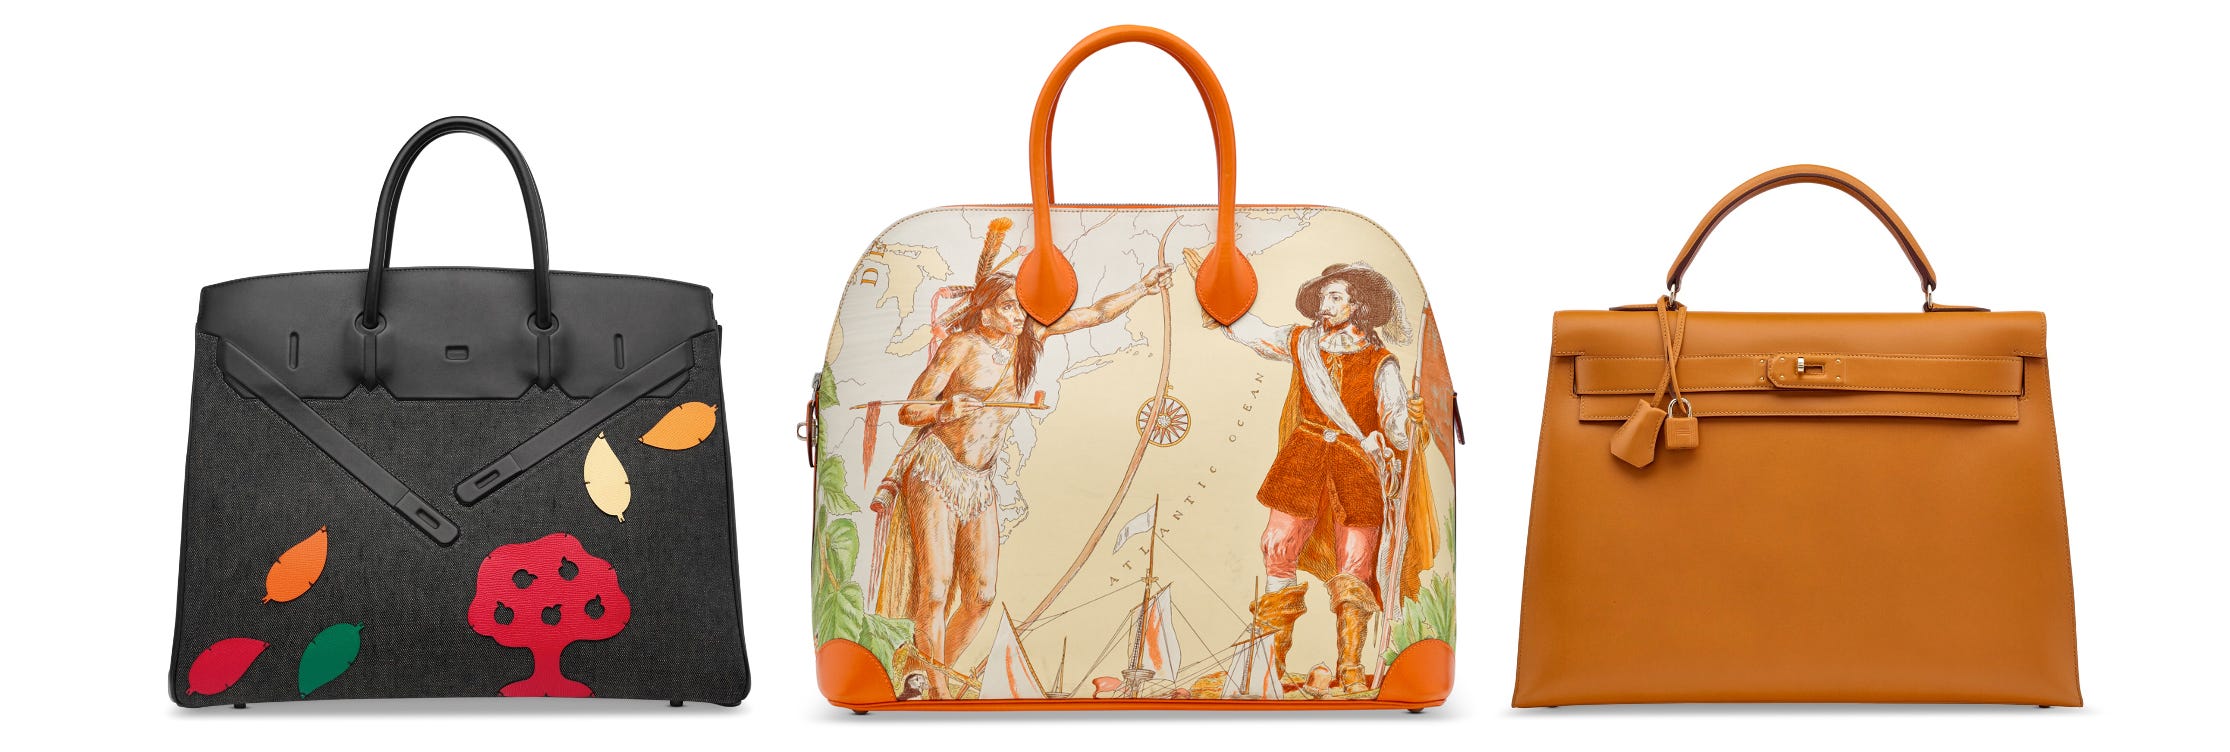 Sold at Auction: Hermes Birkin Bag 40 CM in Orange w Original Box